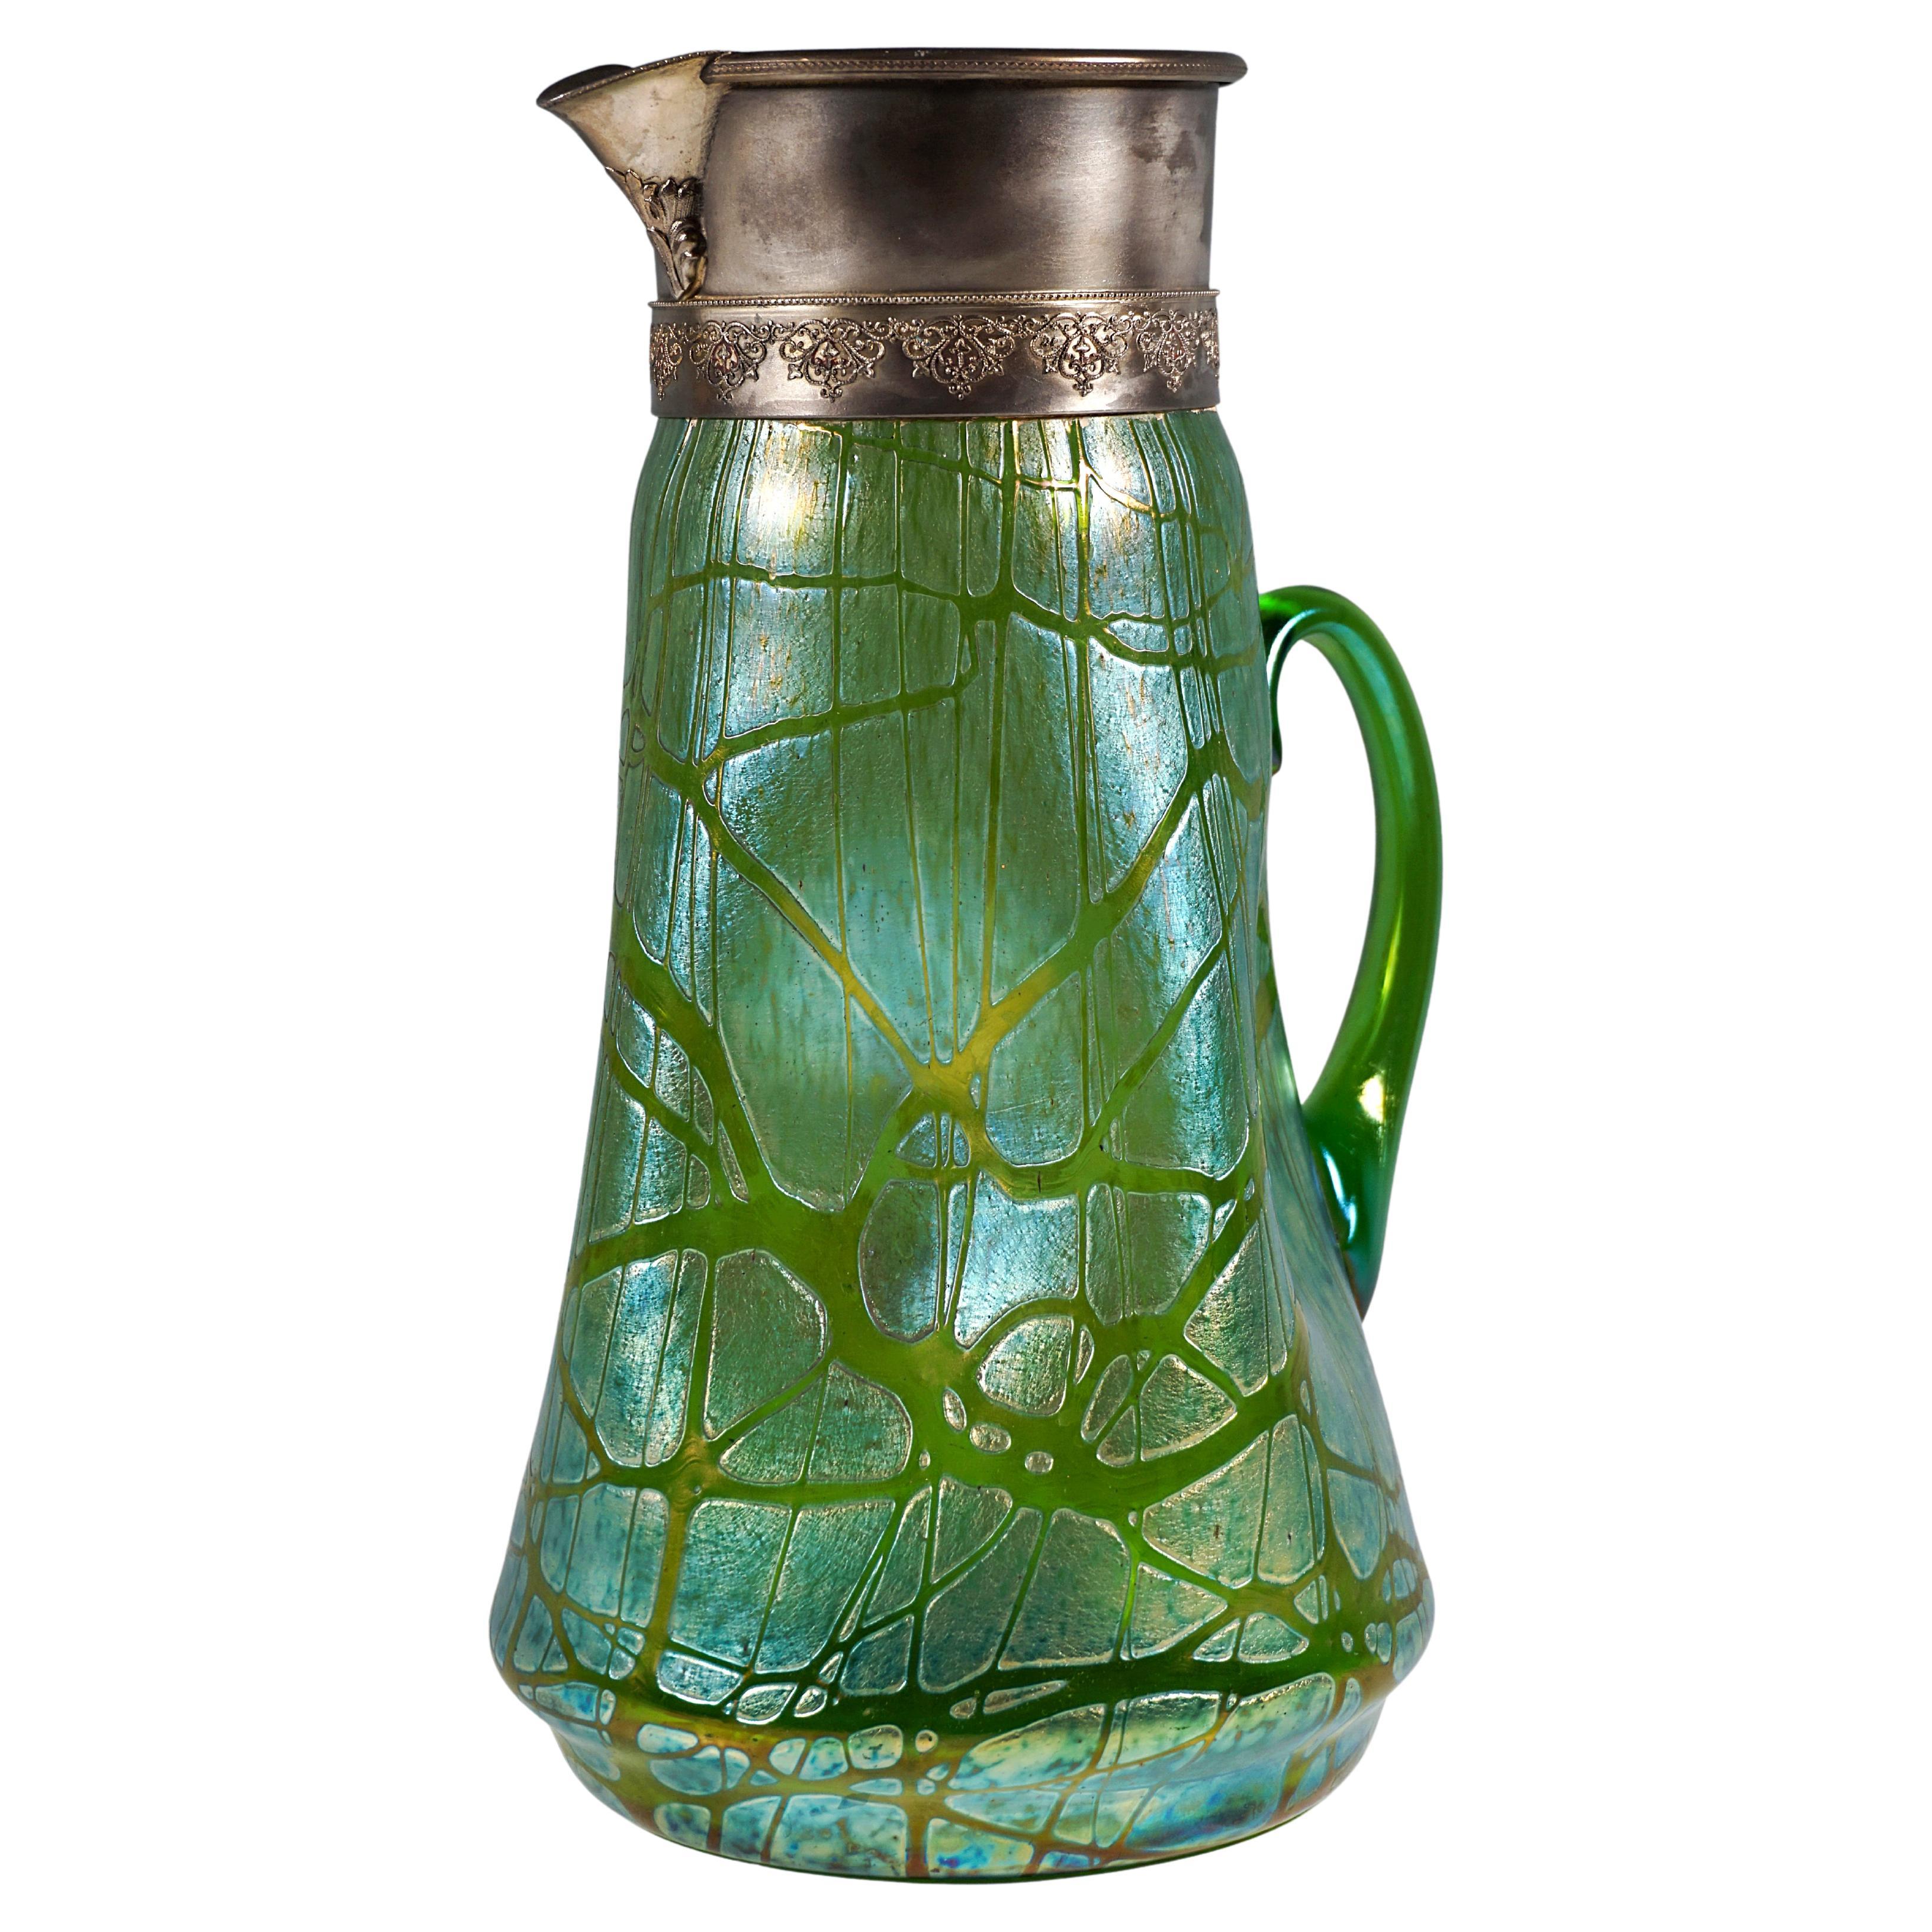 Large Loetz Art Nouveau Water Jar, Decor Creta Pampas, Austria-Hungary, 1898